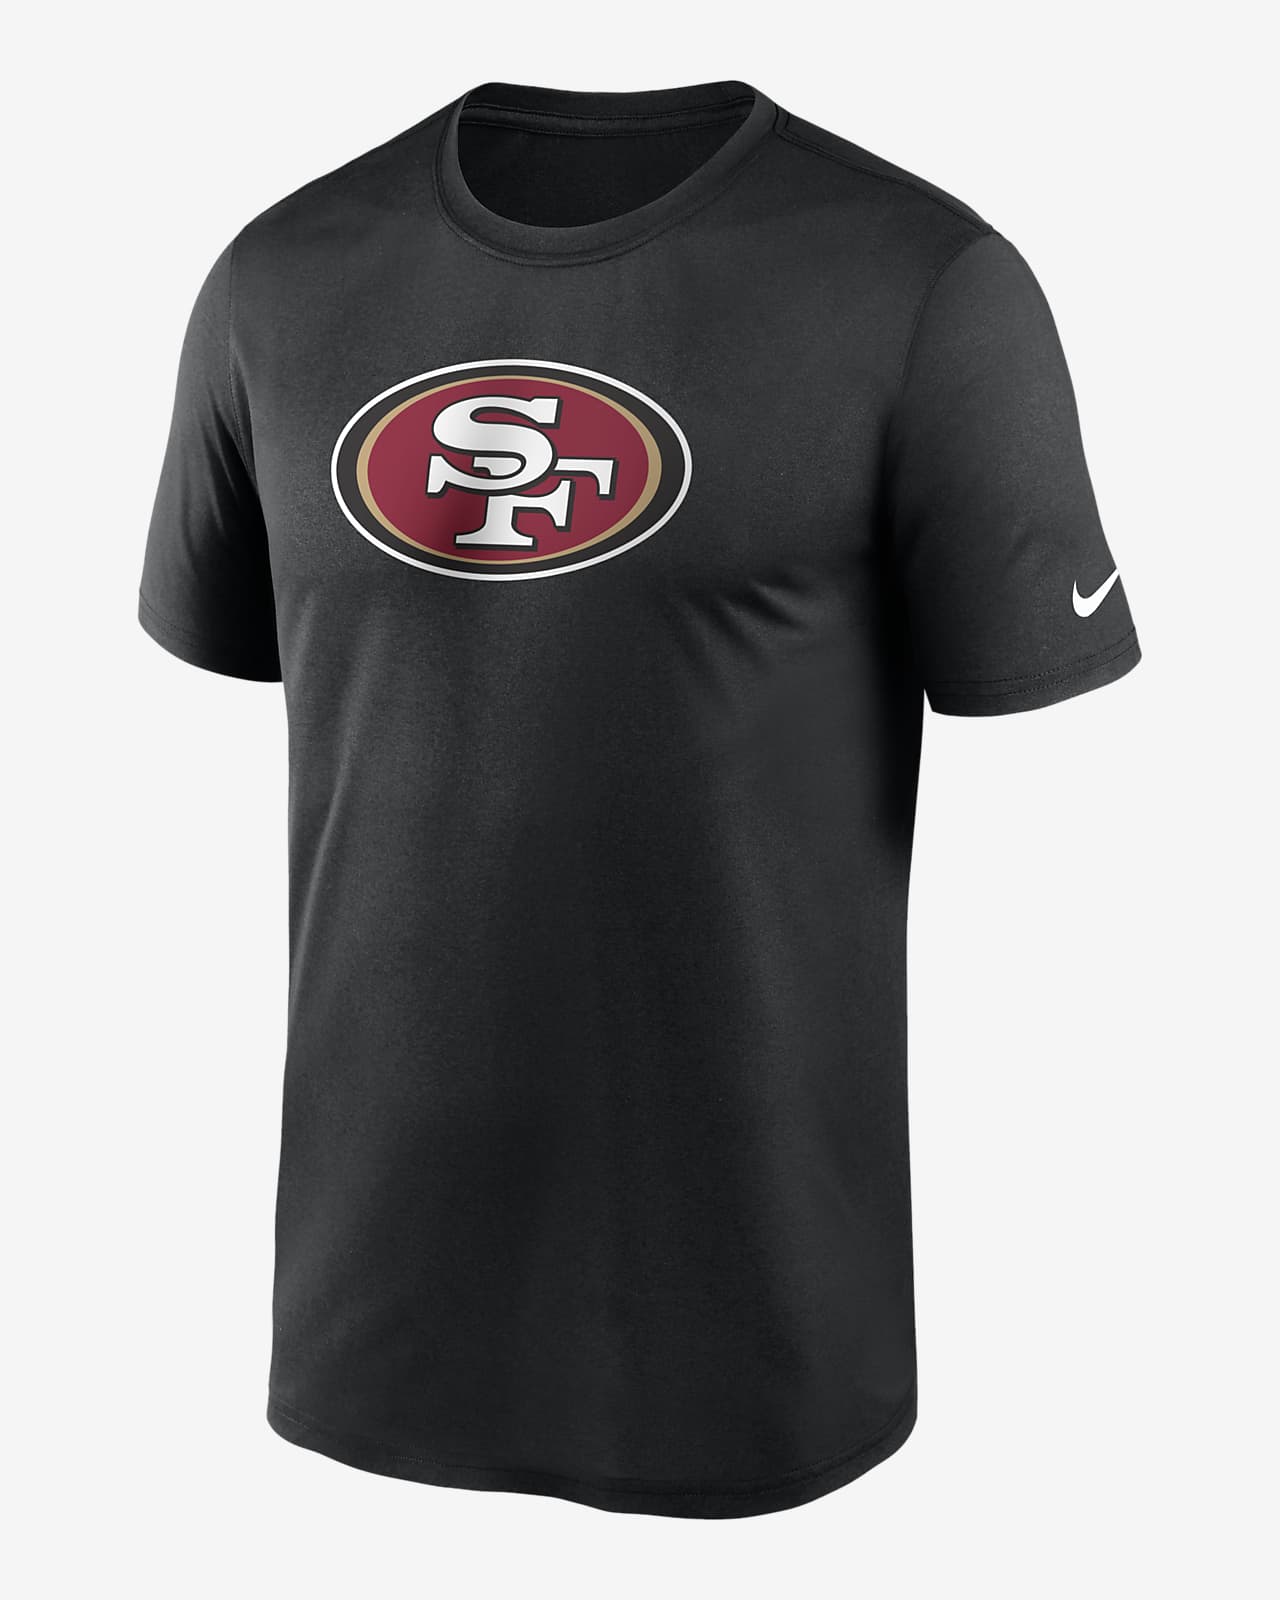 7 Years Size 4  NFL Team Apparel SAN FRANCISCO 49ERS Football T-shirt 